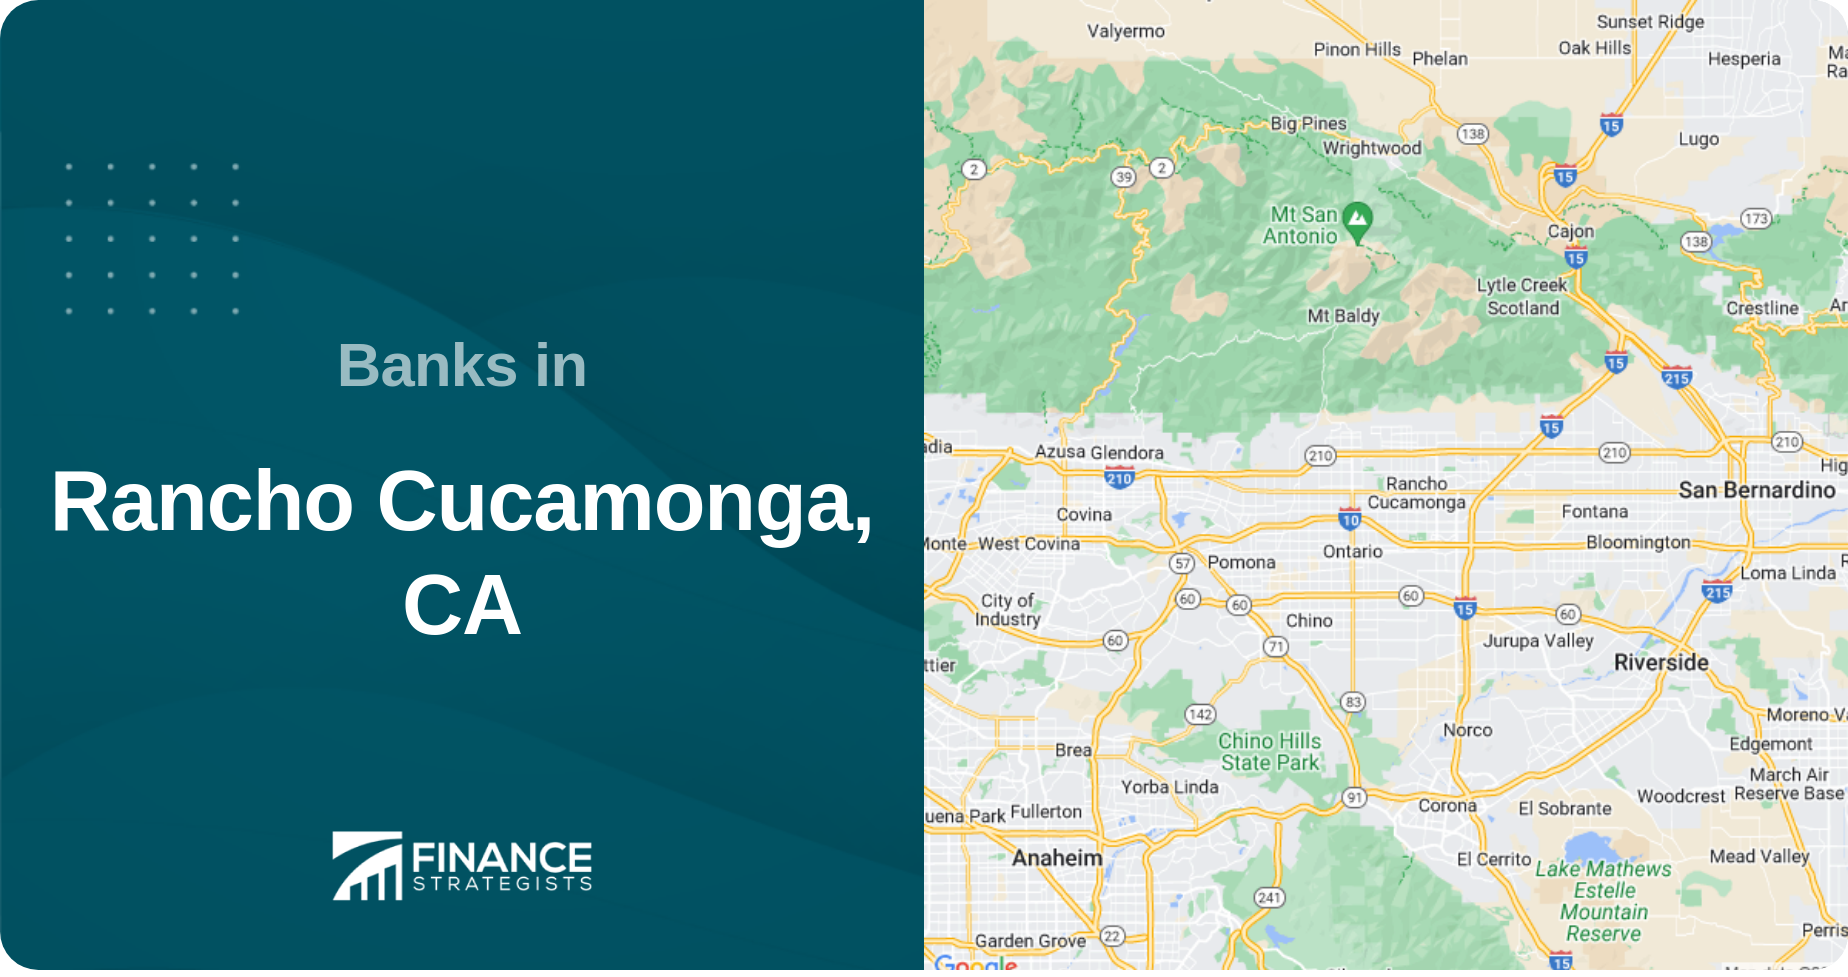 Banks in Rancho Cucamonga, CA